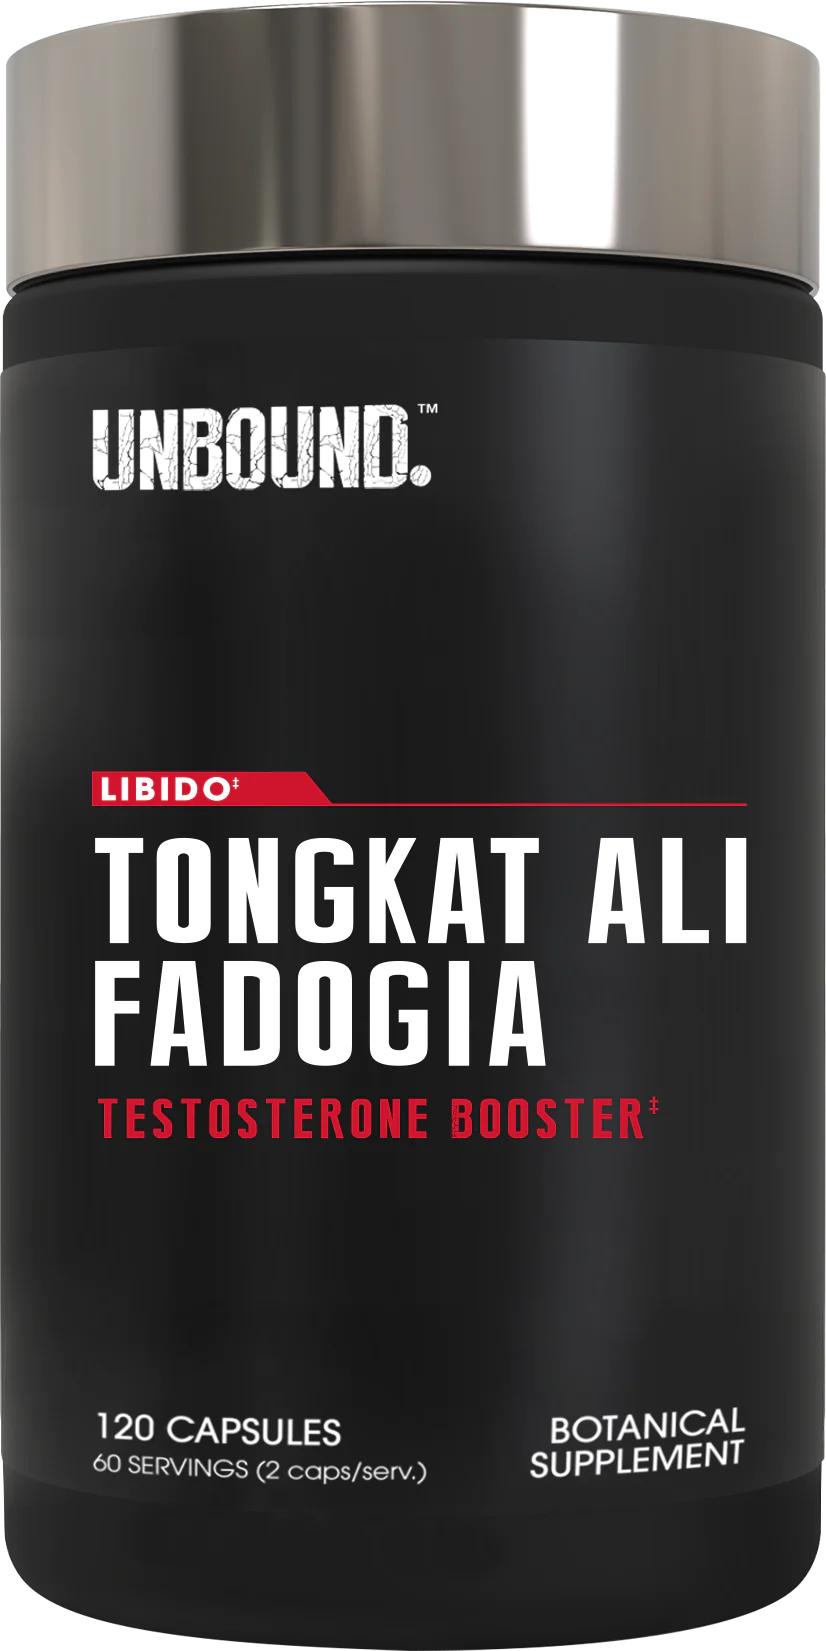 Tongkat Ali & Fadogia Testosterone Booster is